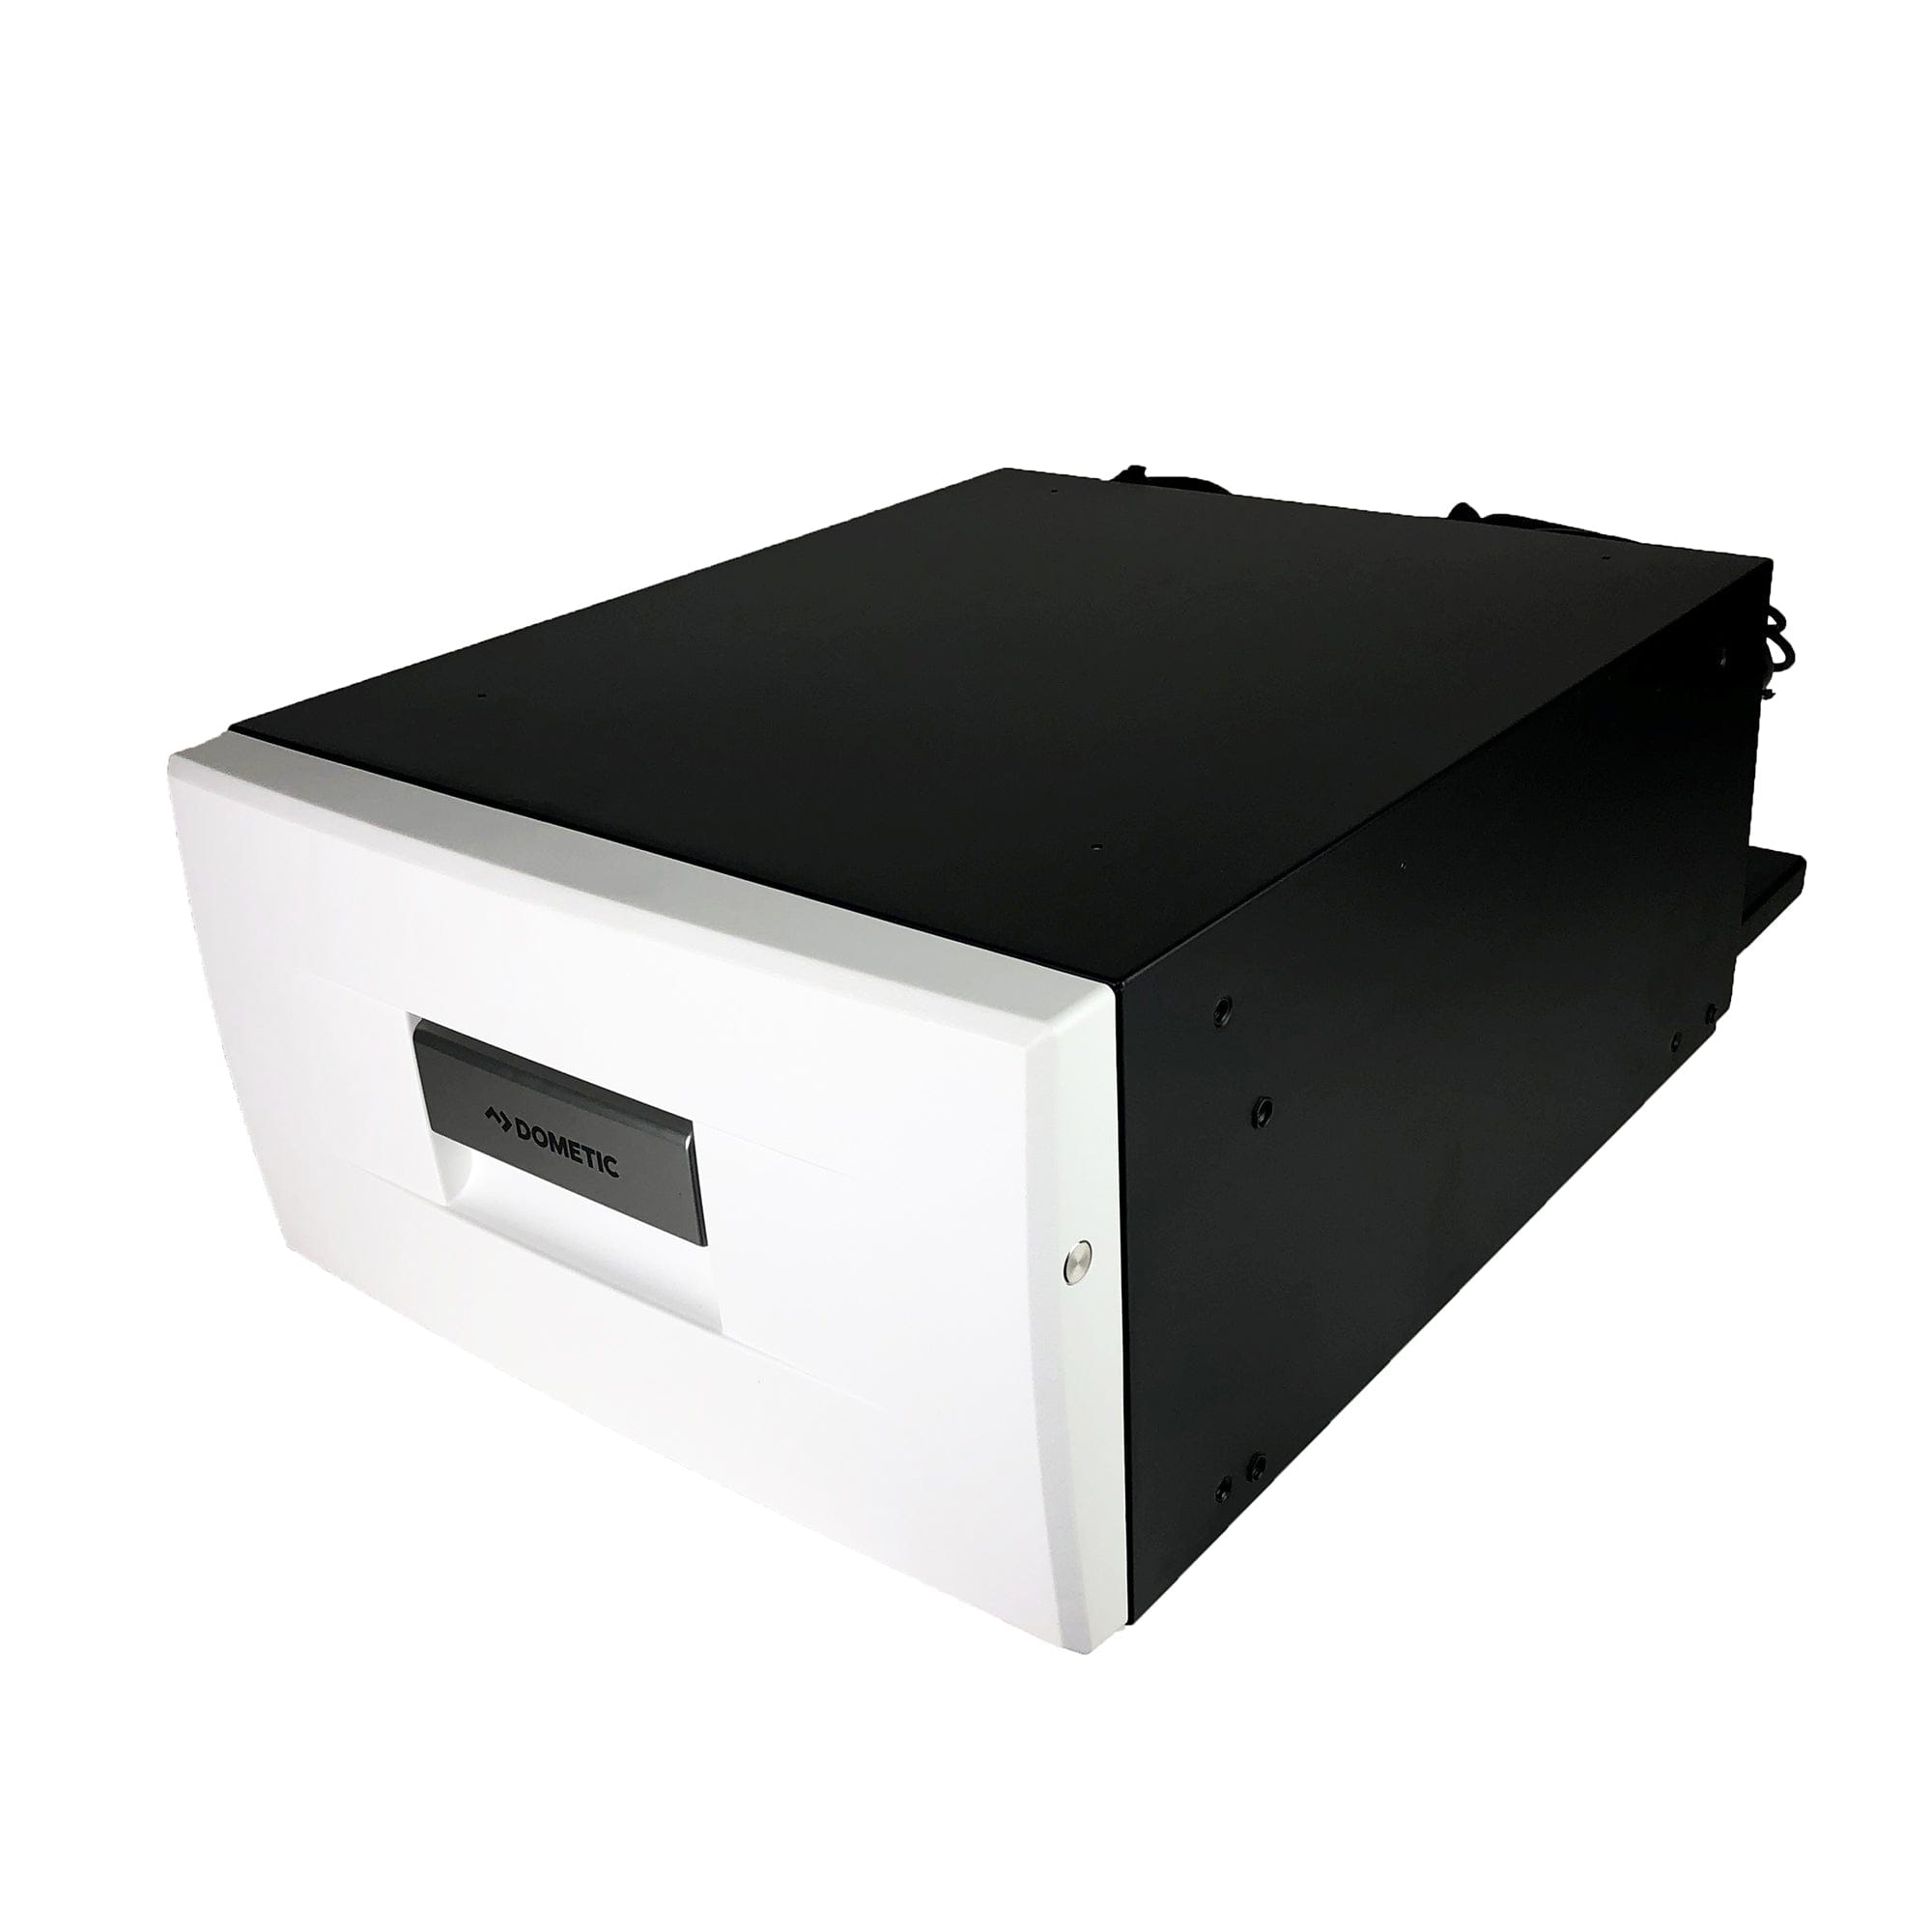 Dometic CD30-BD35FB CoolMatic CD30 1 Cu Ft Drawer Compressor Refrigerator